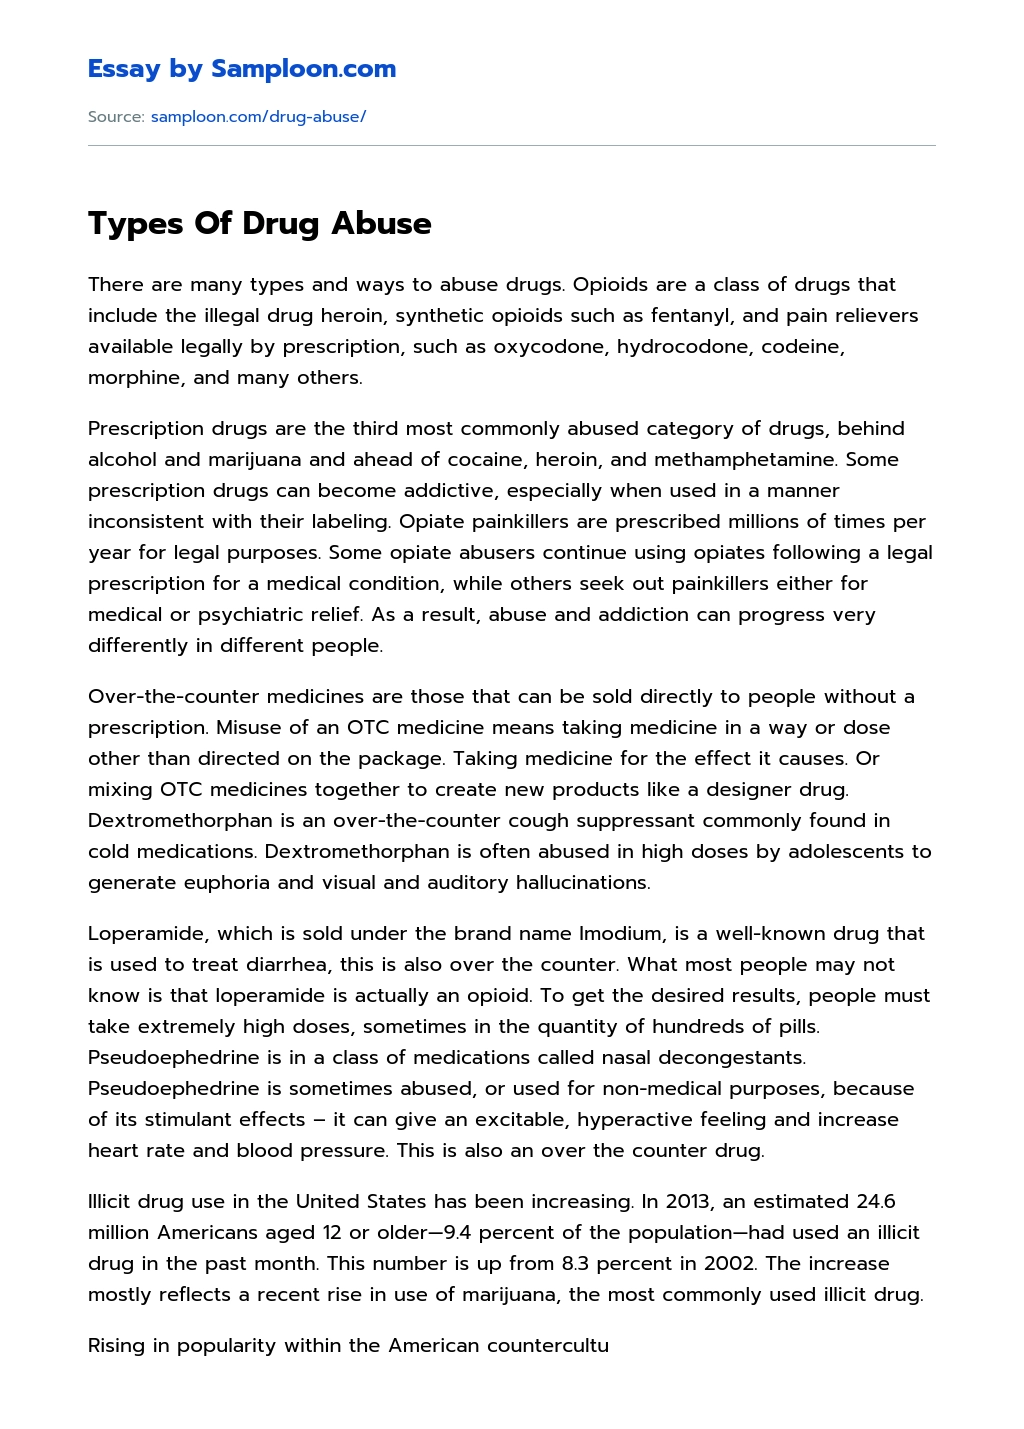 Types Of Drug Abuse essay